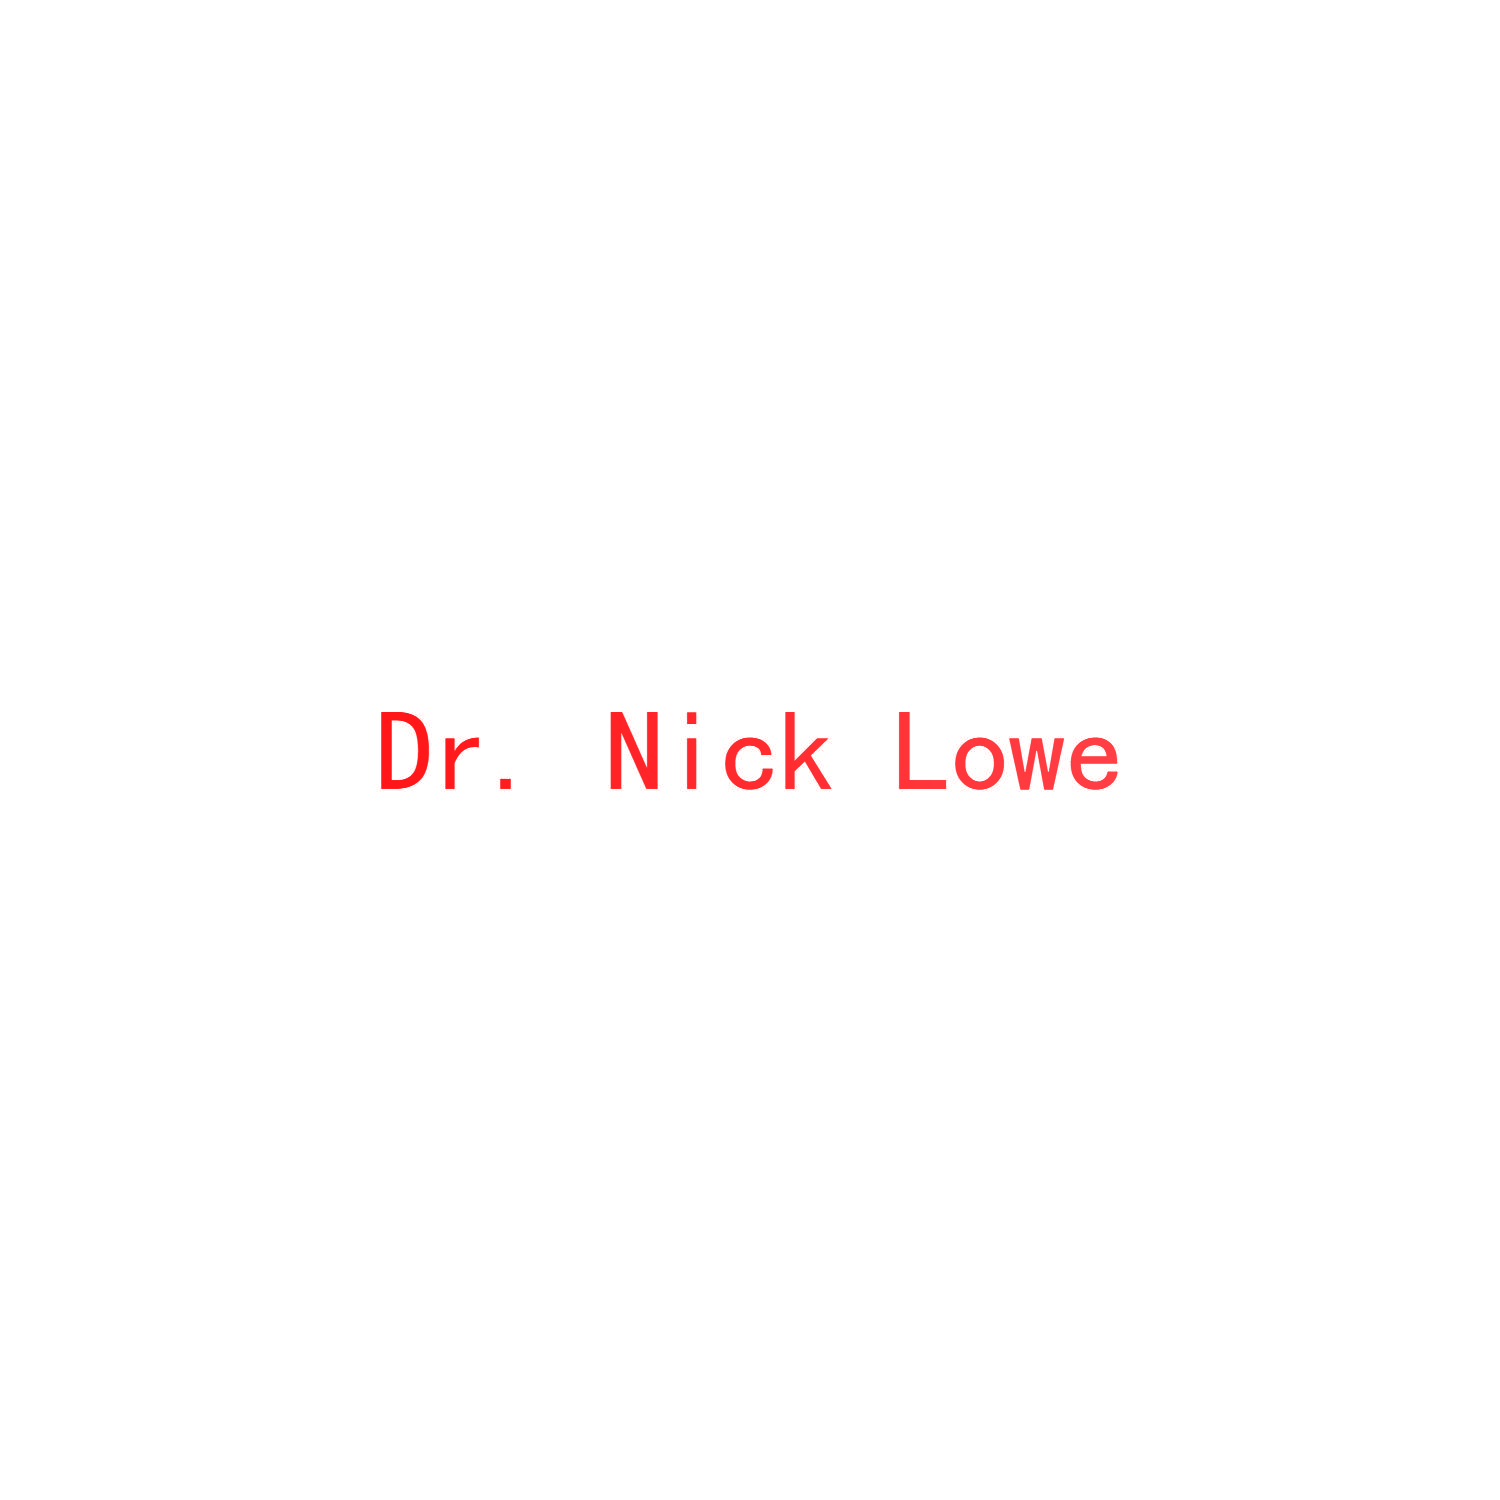 DR. NICK LOWE